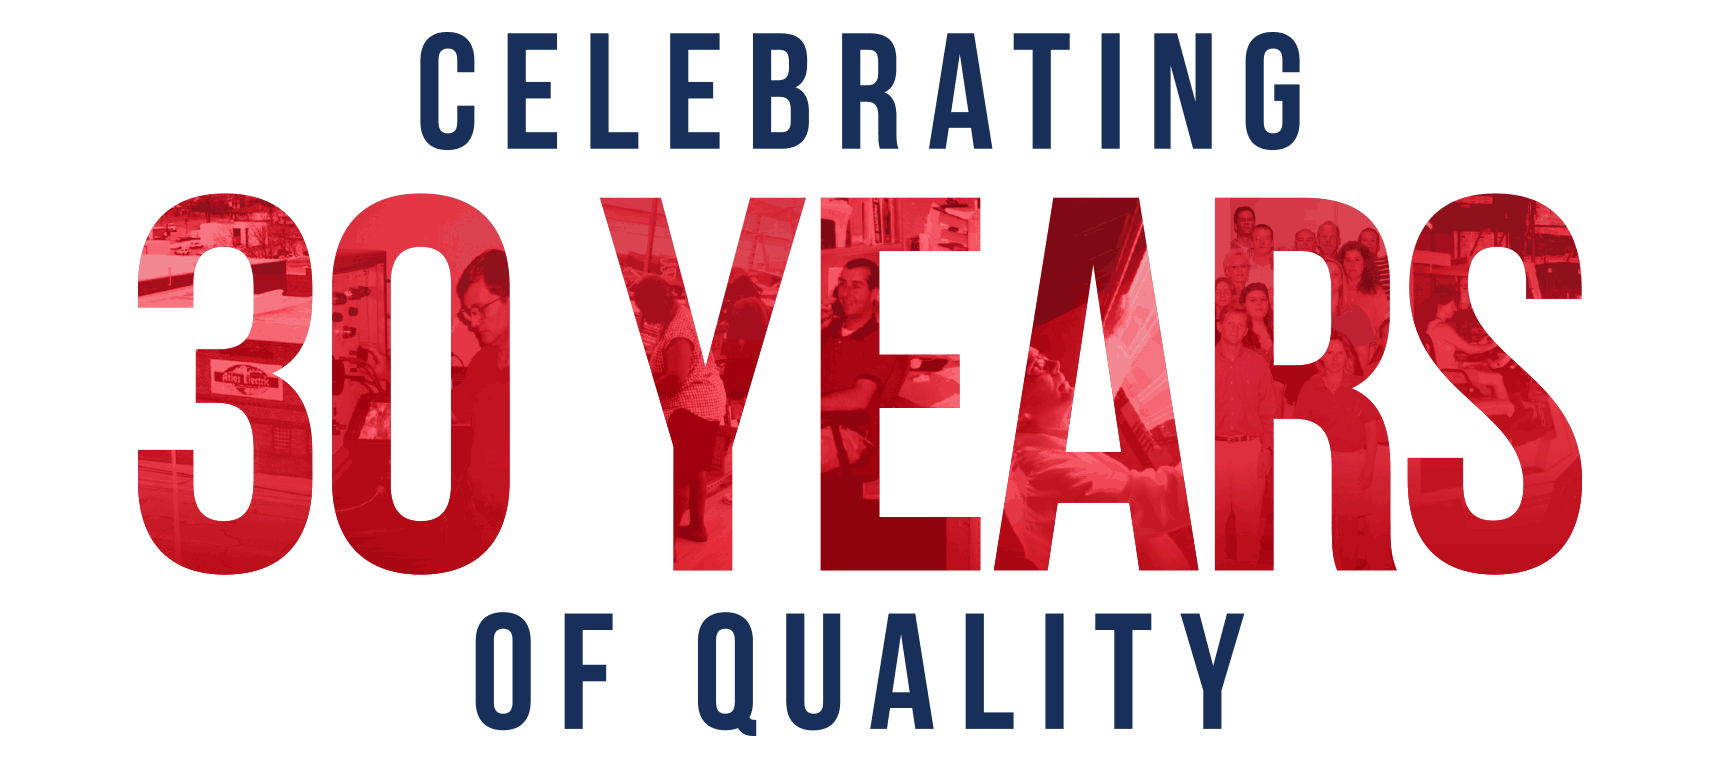 Celebrating 30 Years of Quality